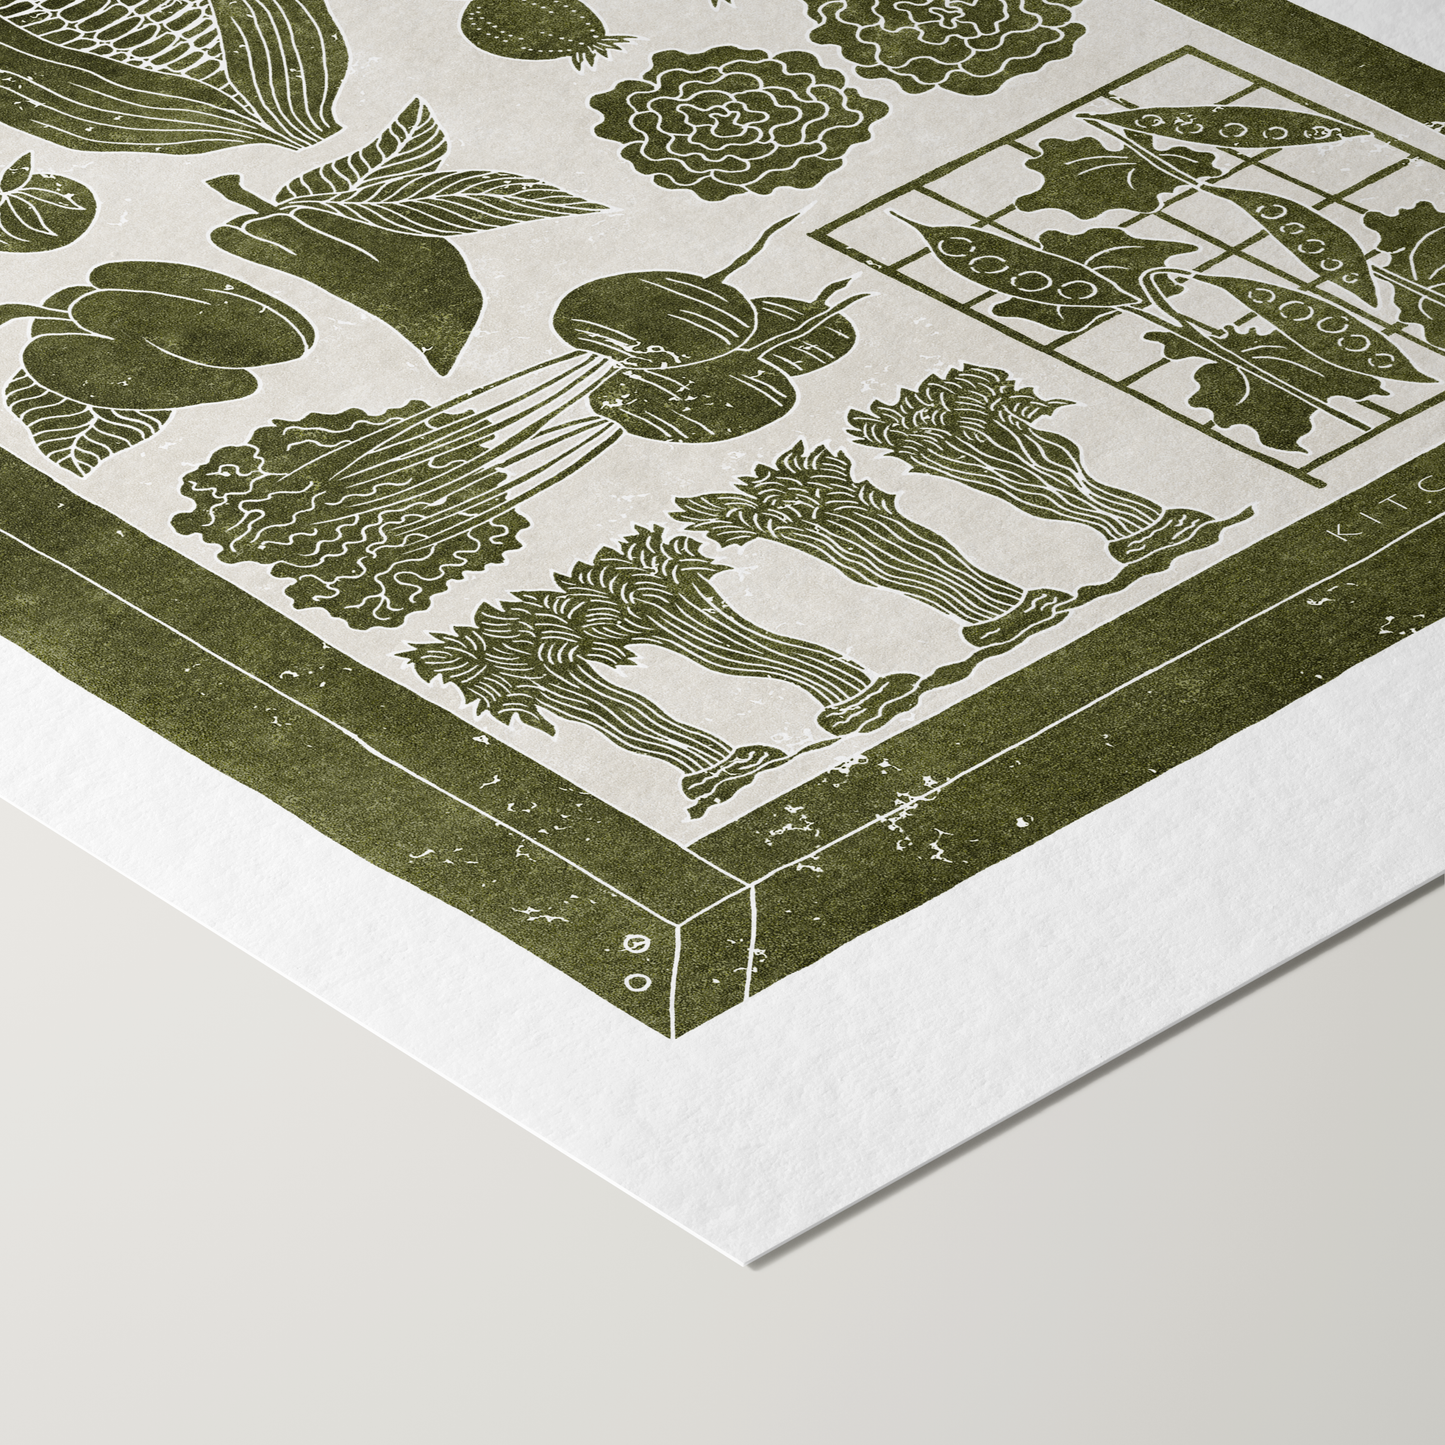 Home Decor Print - Nature-inspired Prints - Kitchen Garden - Linocut Effect Illustration - Green - Hahnemühle German Etching Paper - Close Up